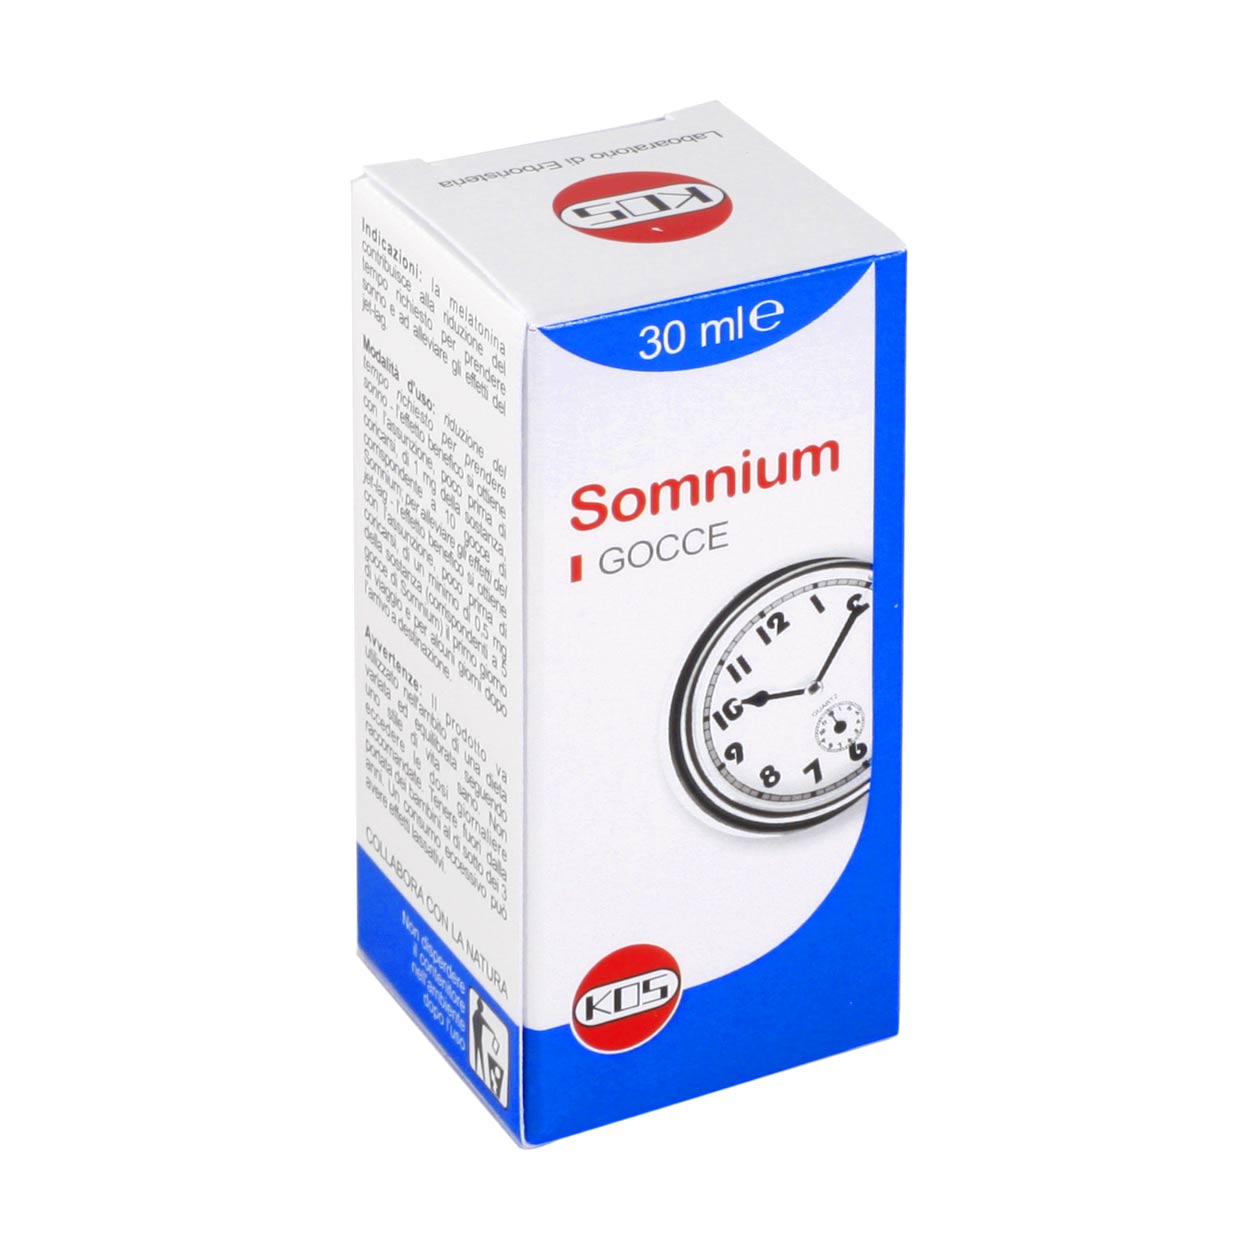 Somnium gocce ml 30                